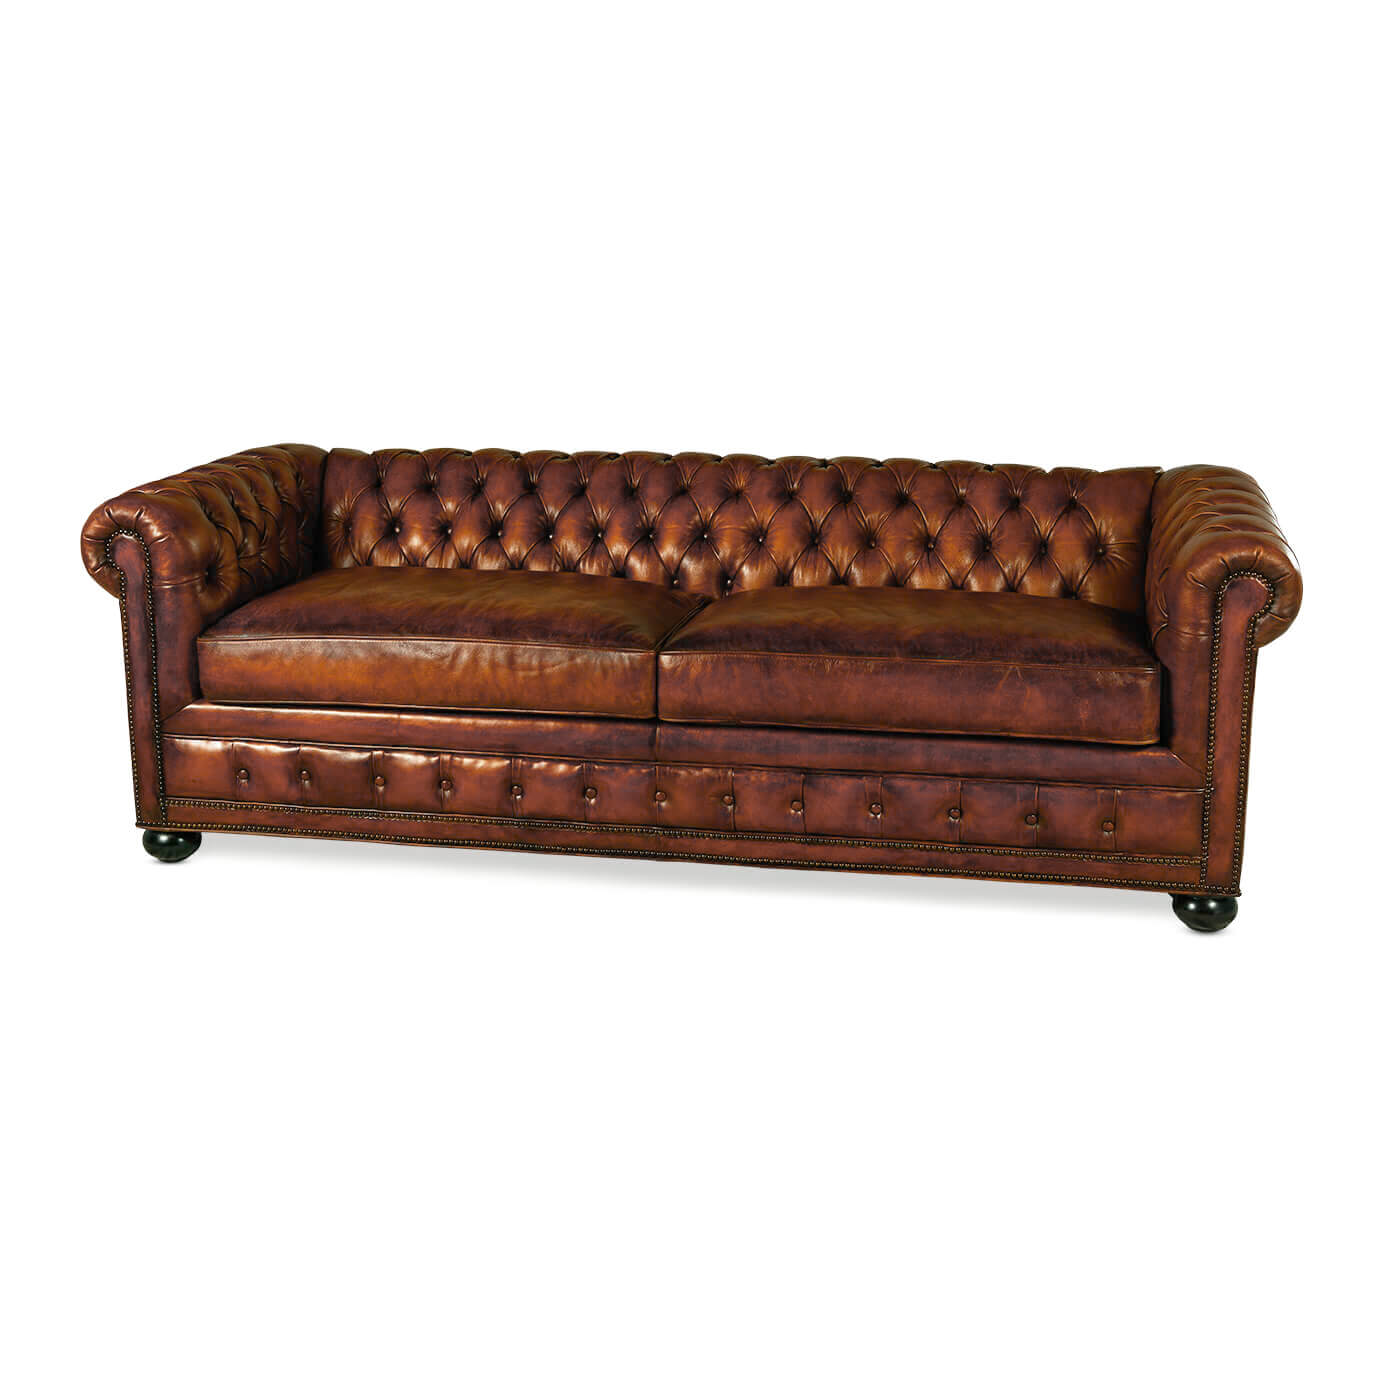 Antiqued Chesterfield Leather Sofa - English Georgian America